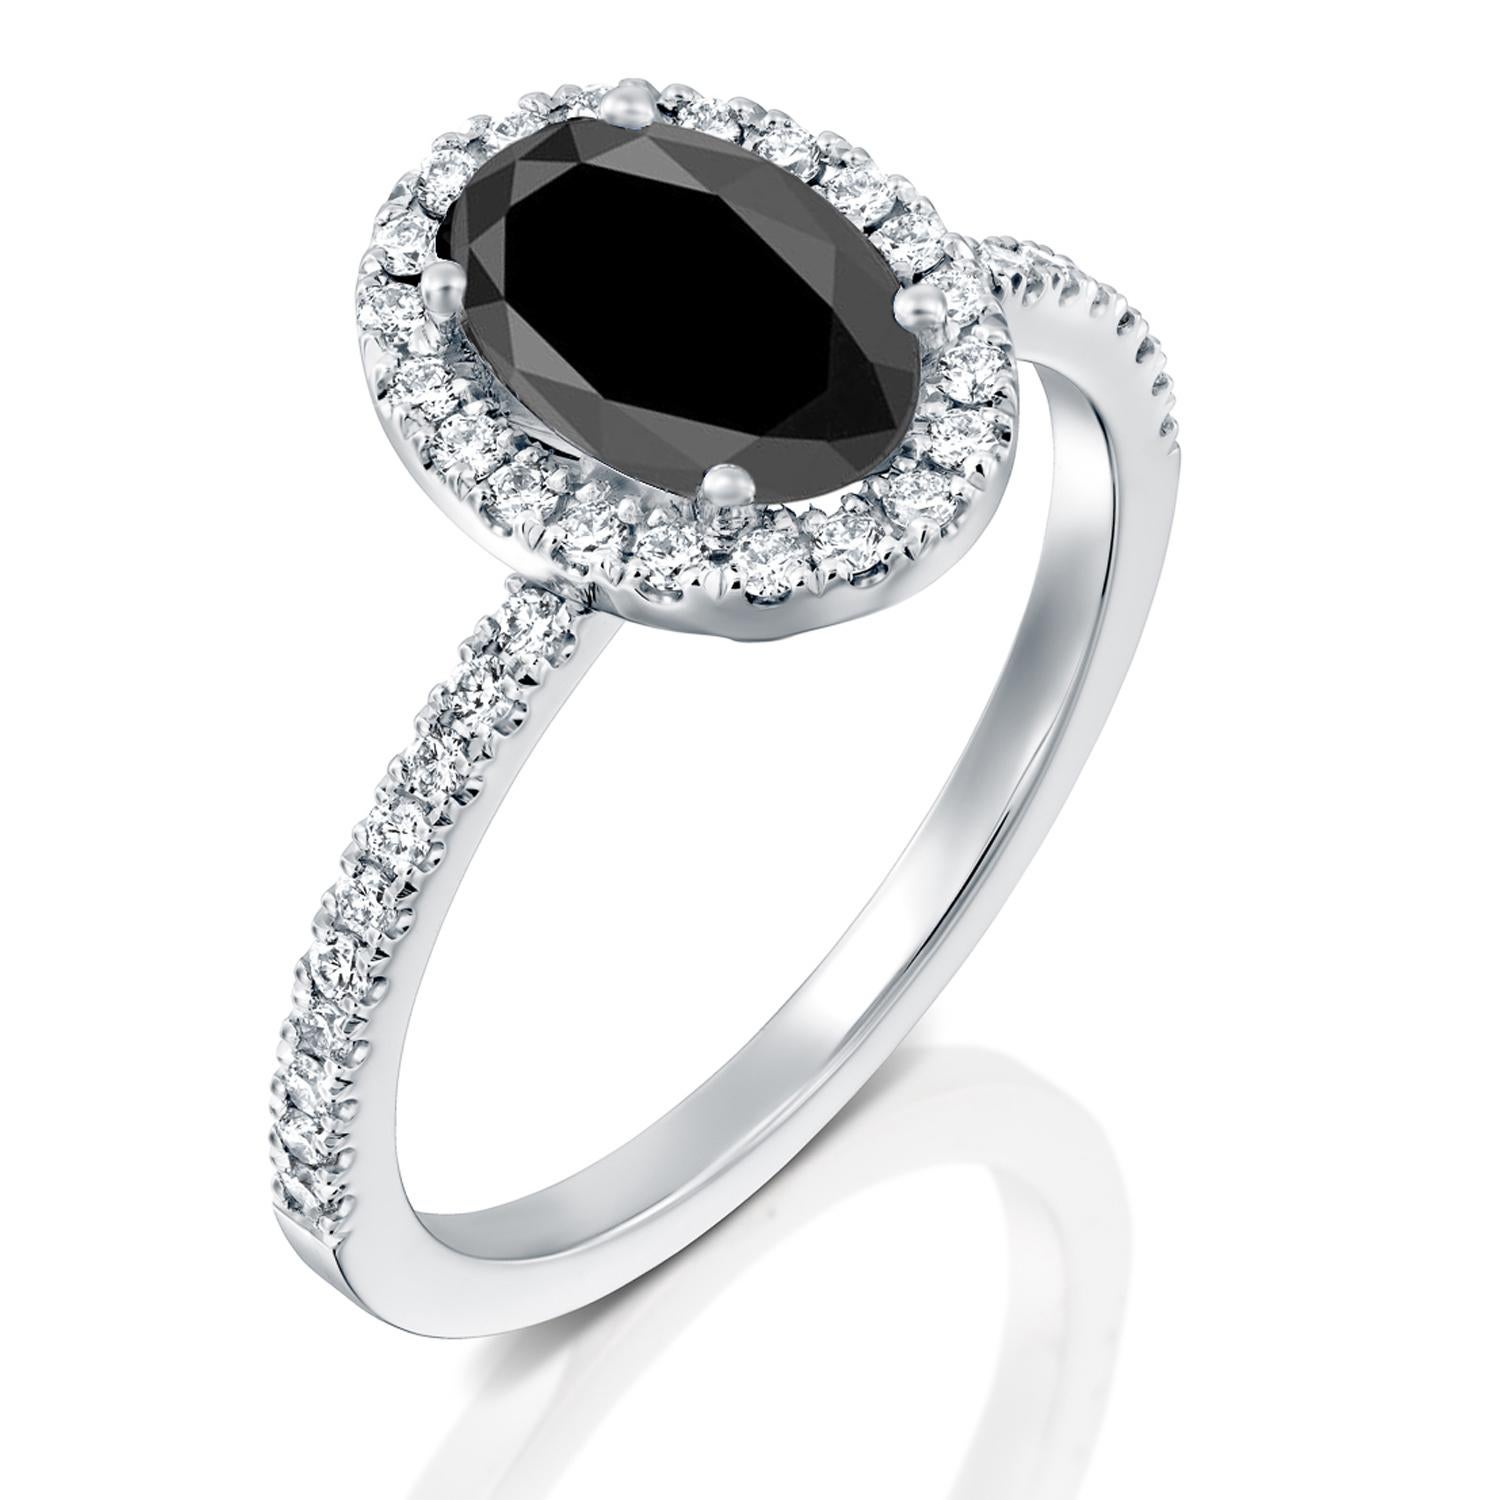 2.5 carat black diamond ring